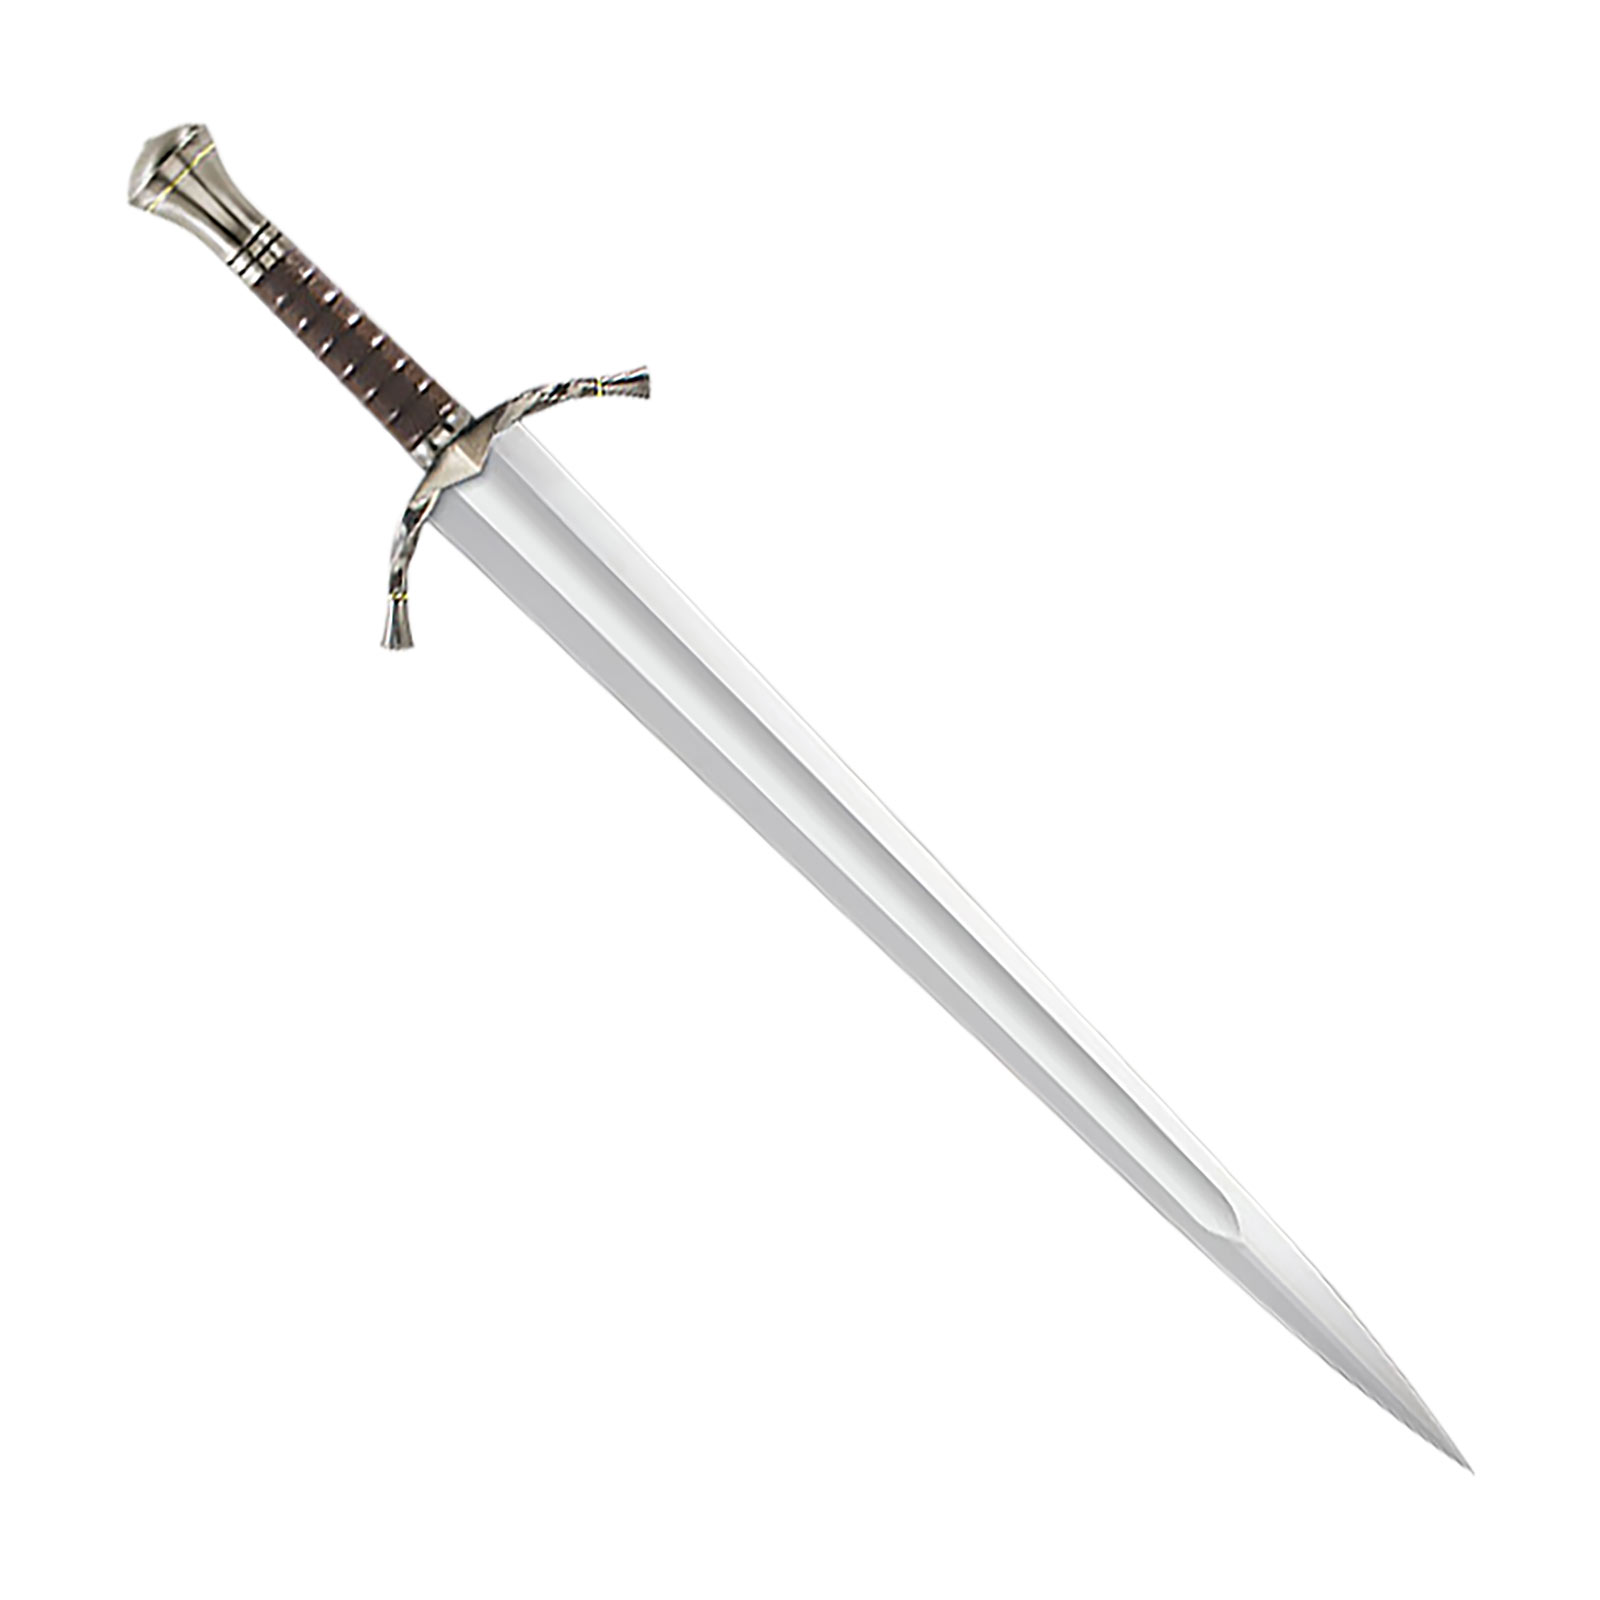 Boromirs Schwert Replik - Herr der Ringe